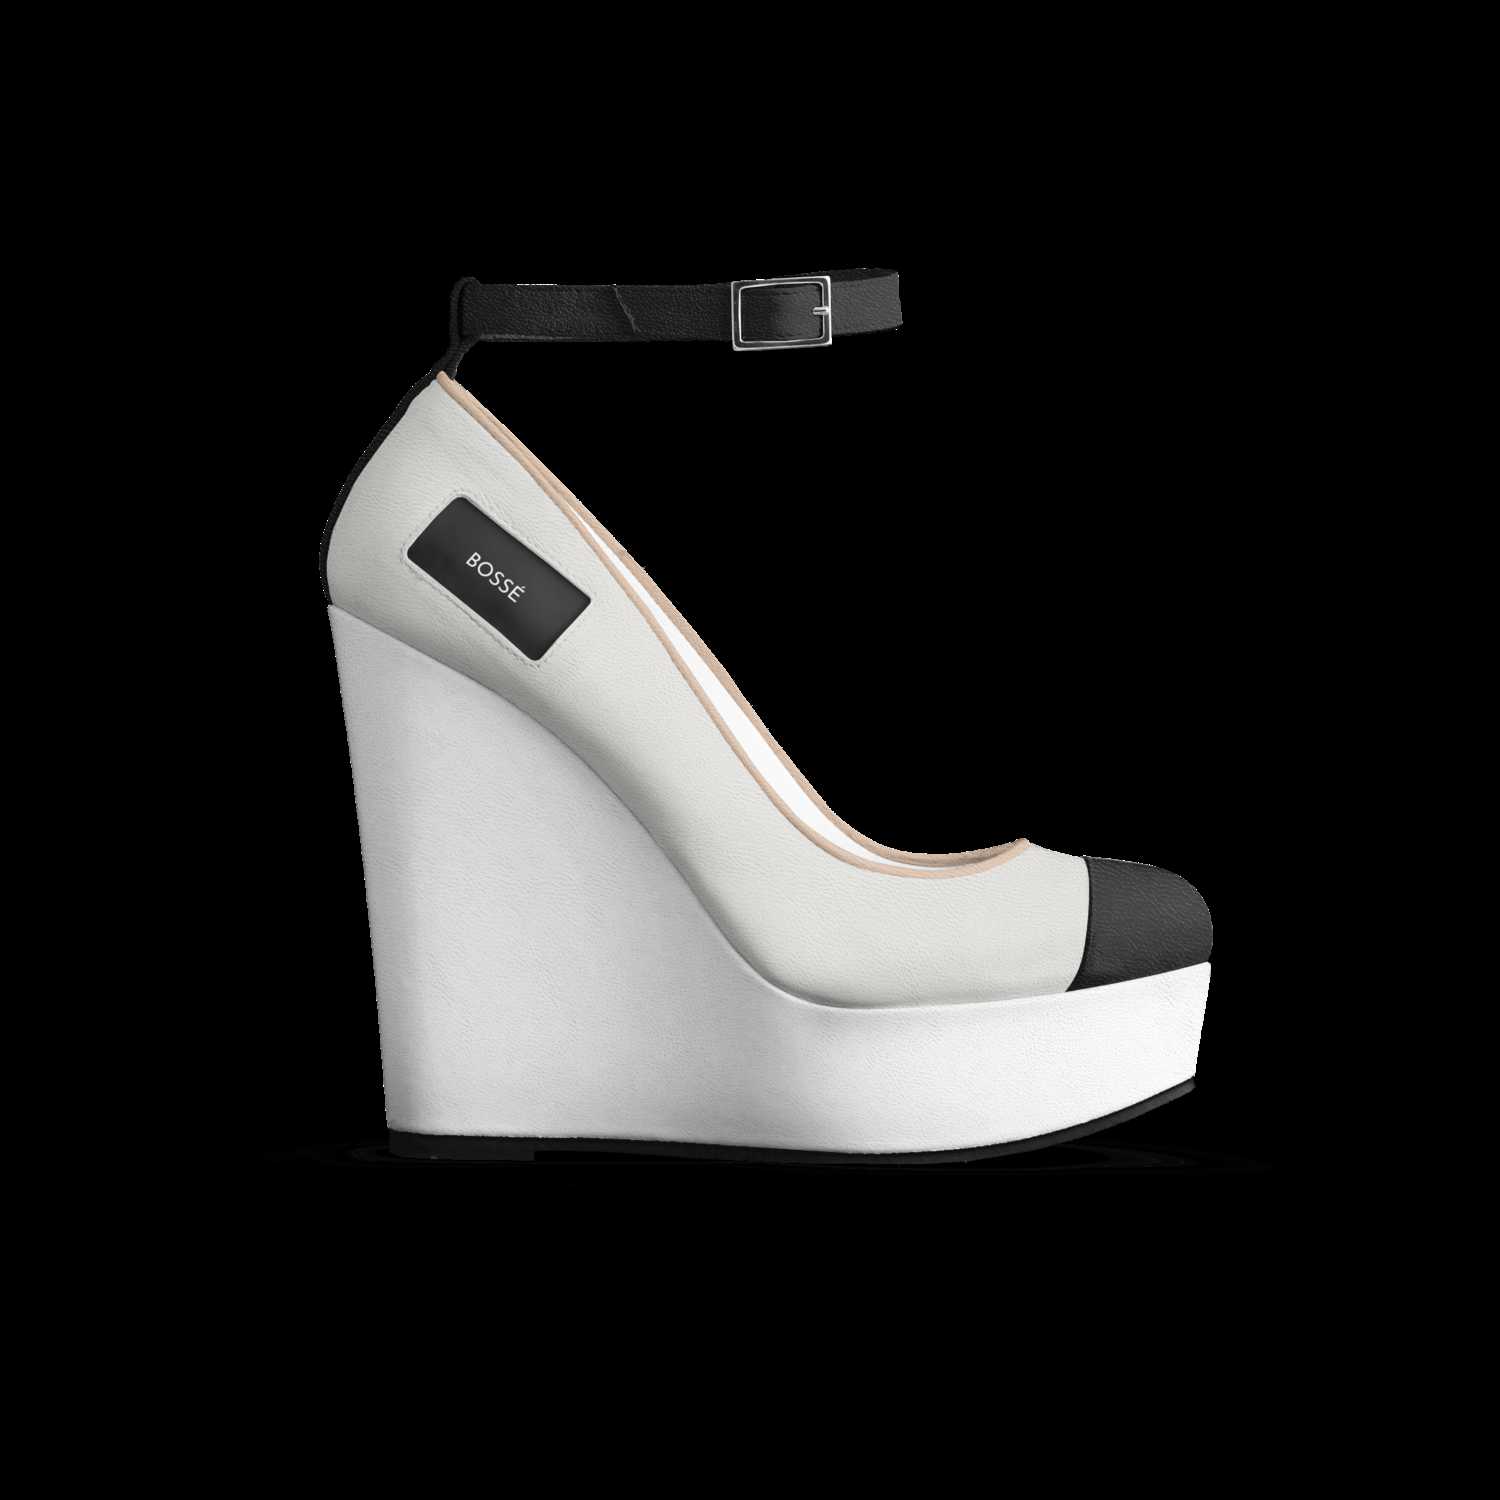 A Custom Shoe concept by Michelle Daniels